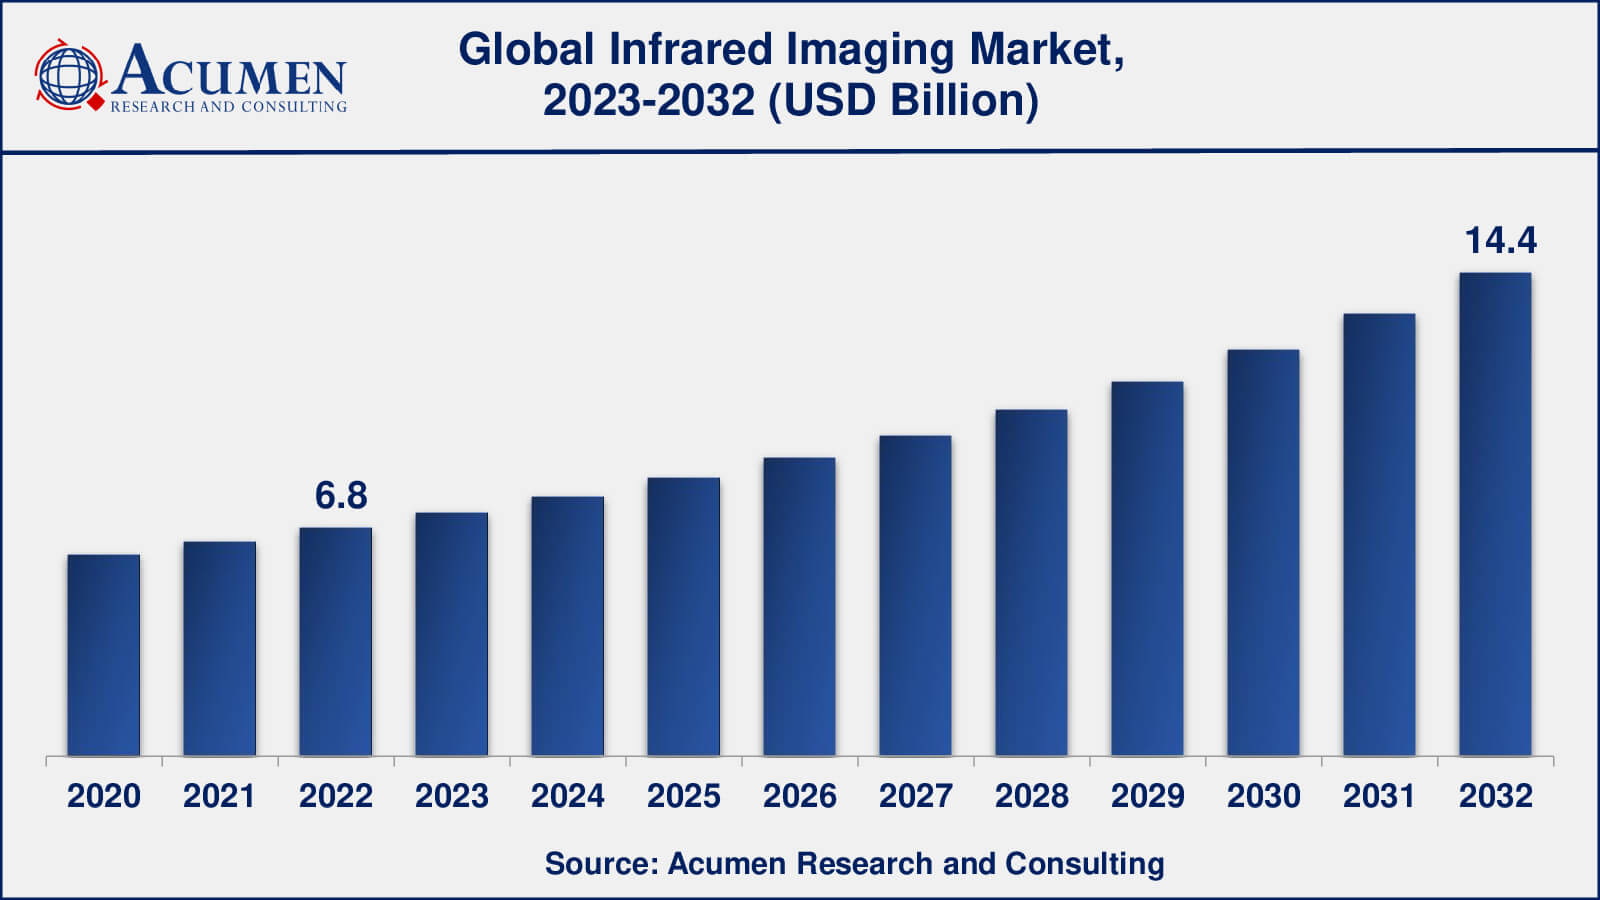 Global Infrared Imaging Market Dynamics